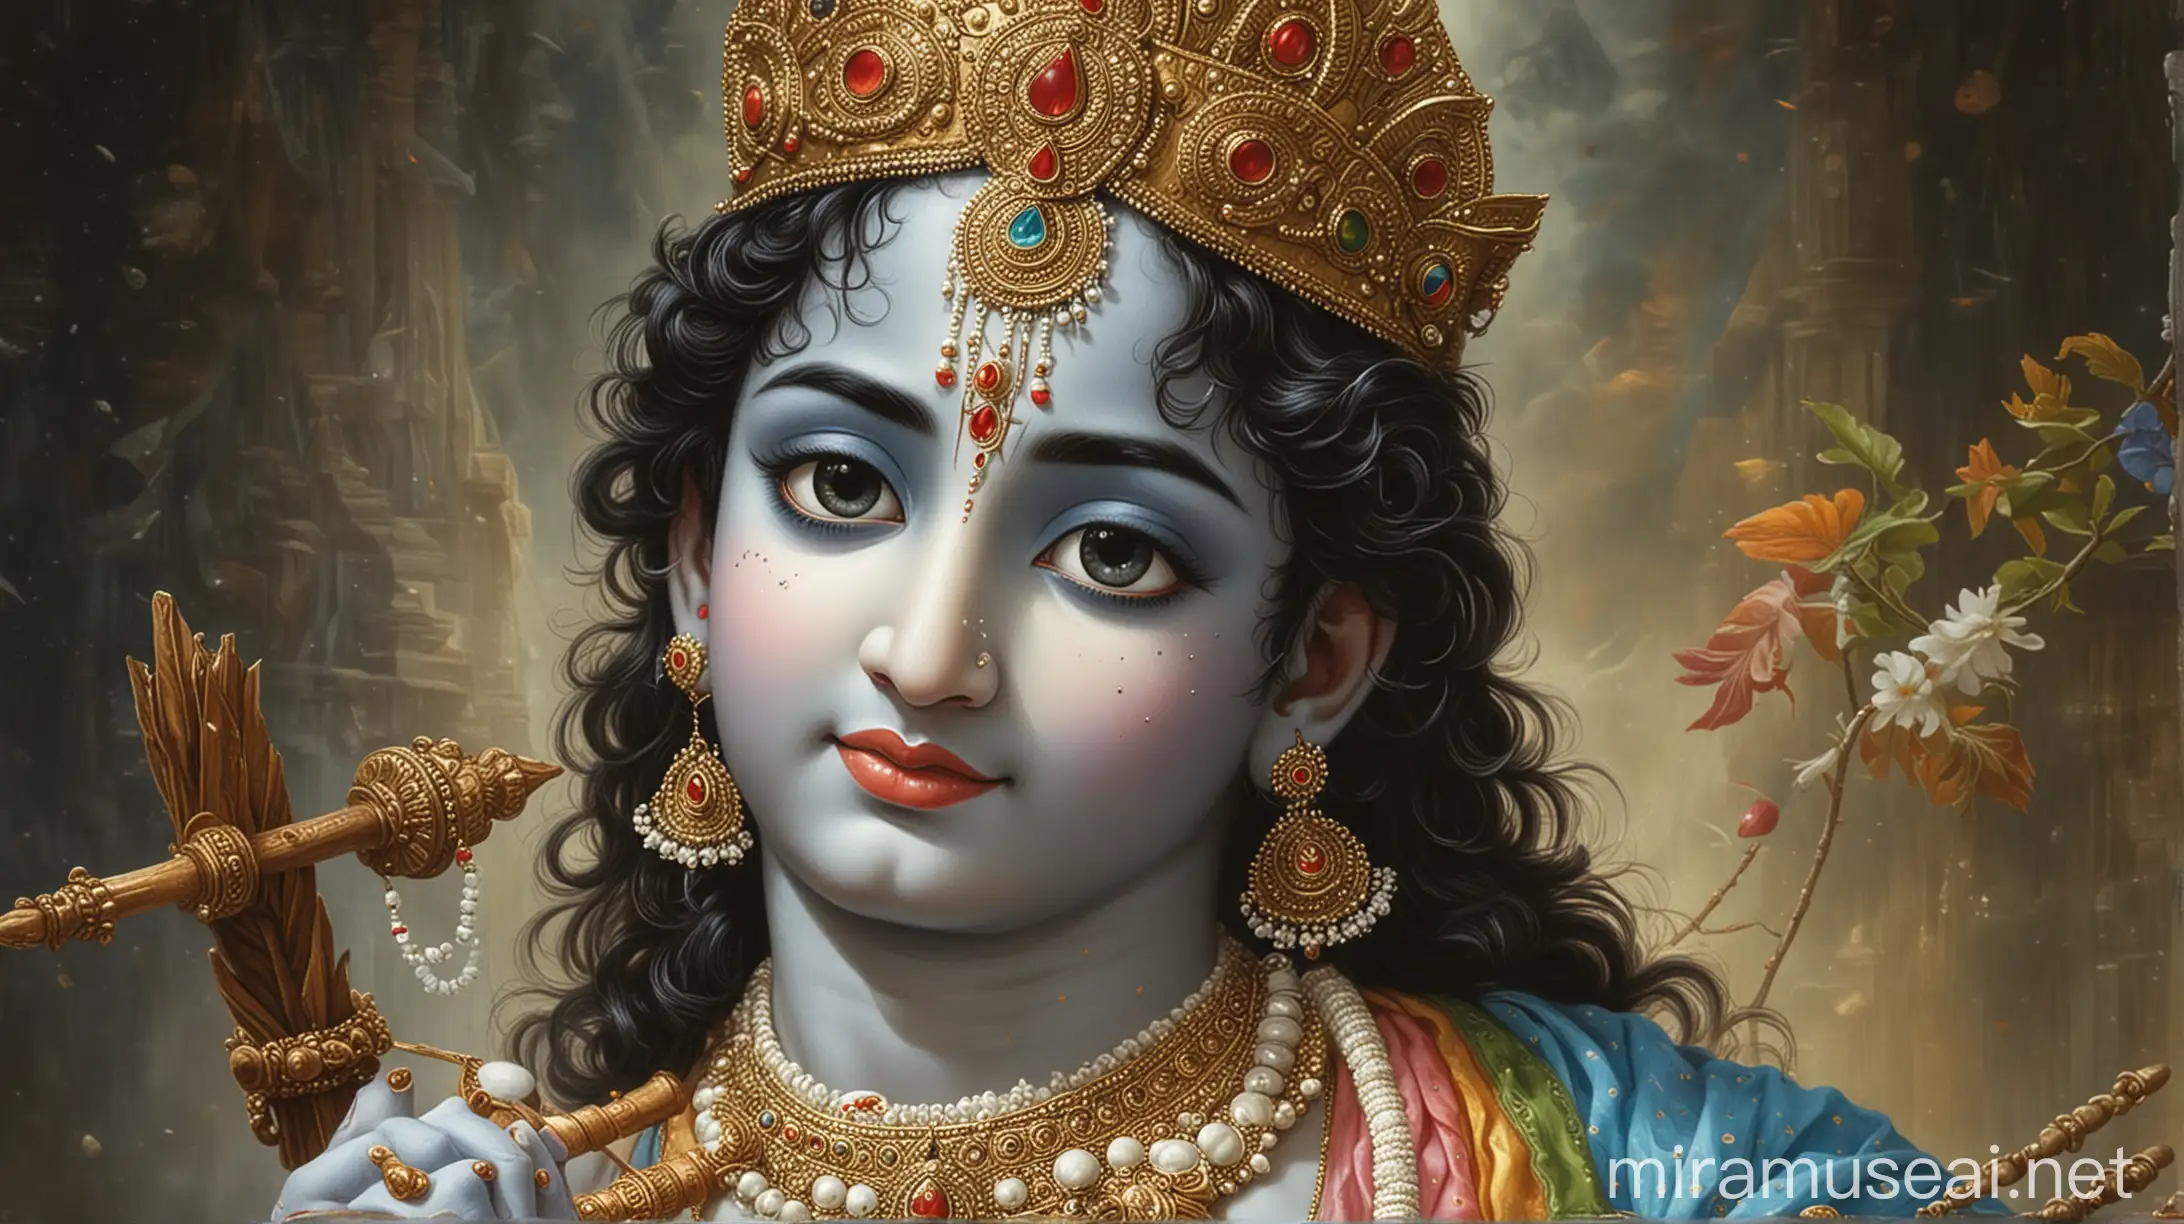 Hail Lord Krishna